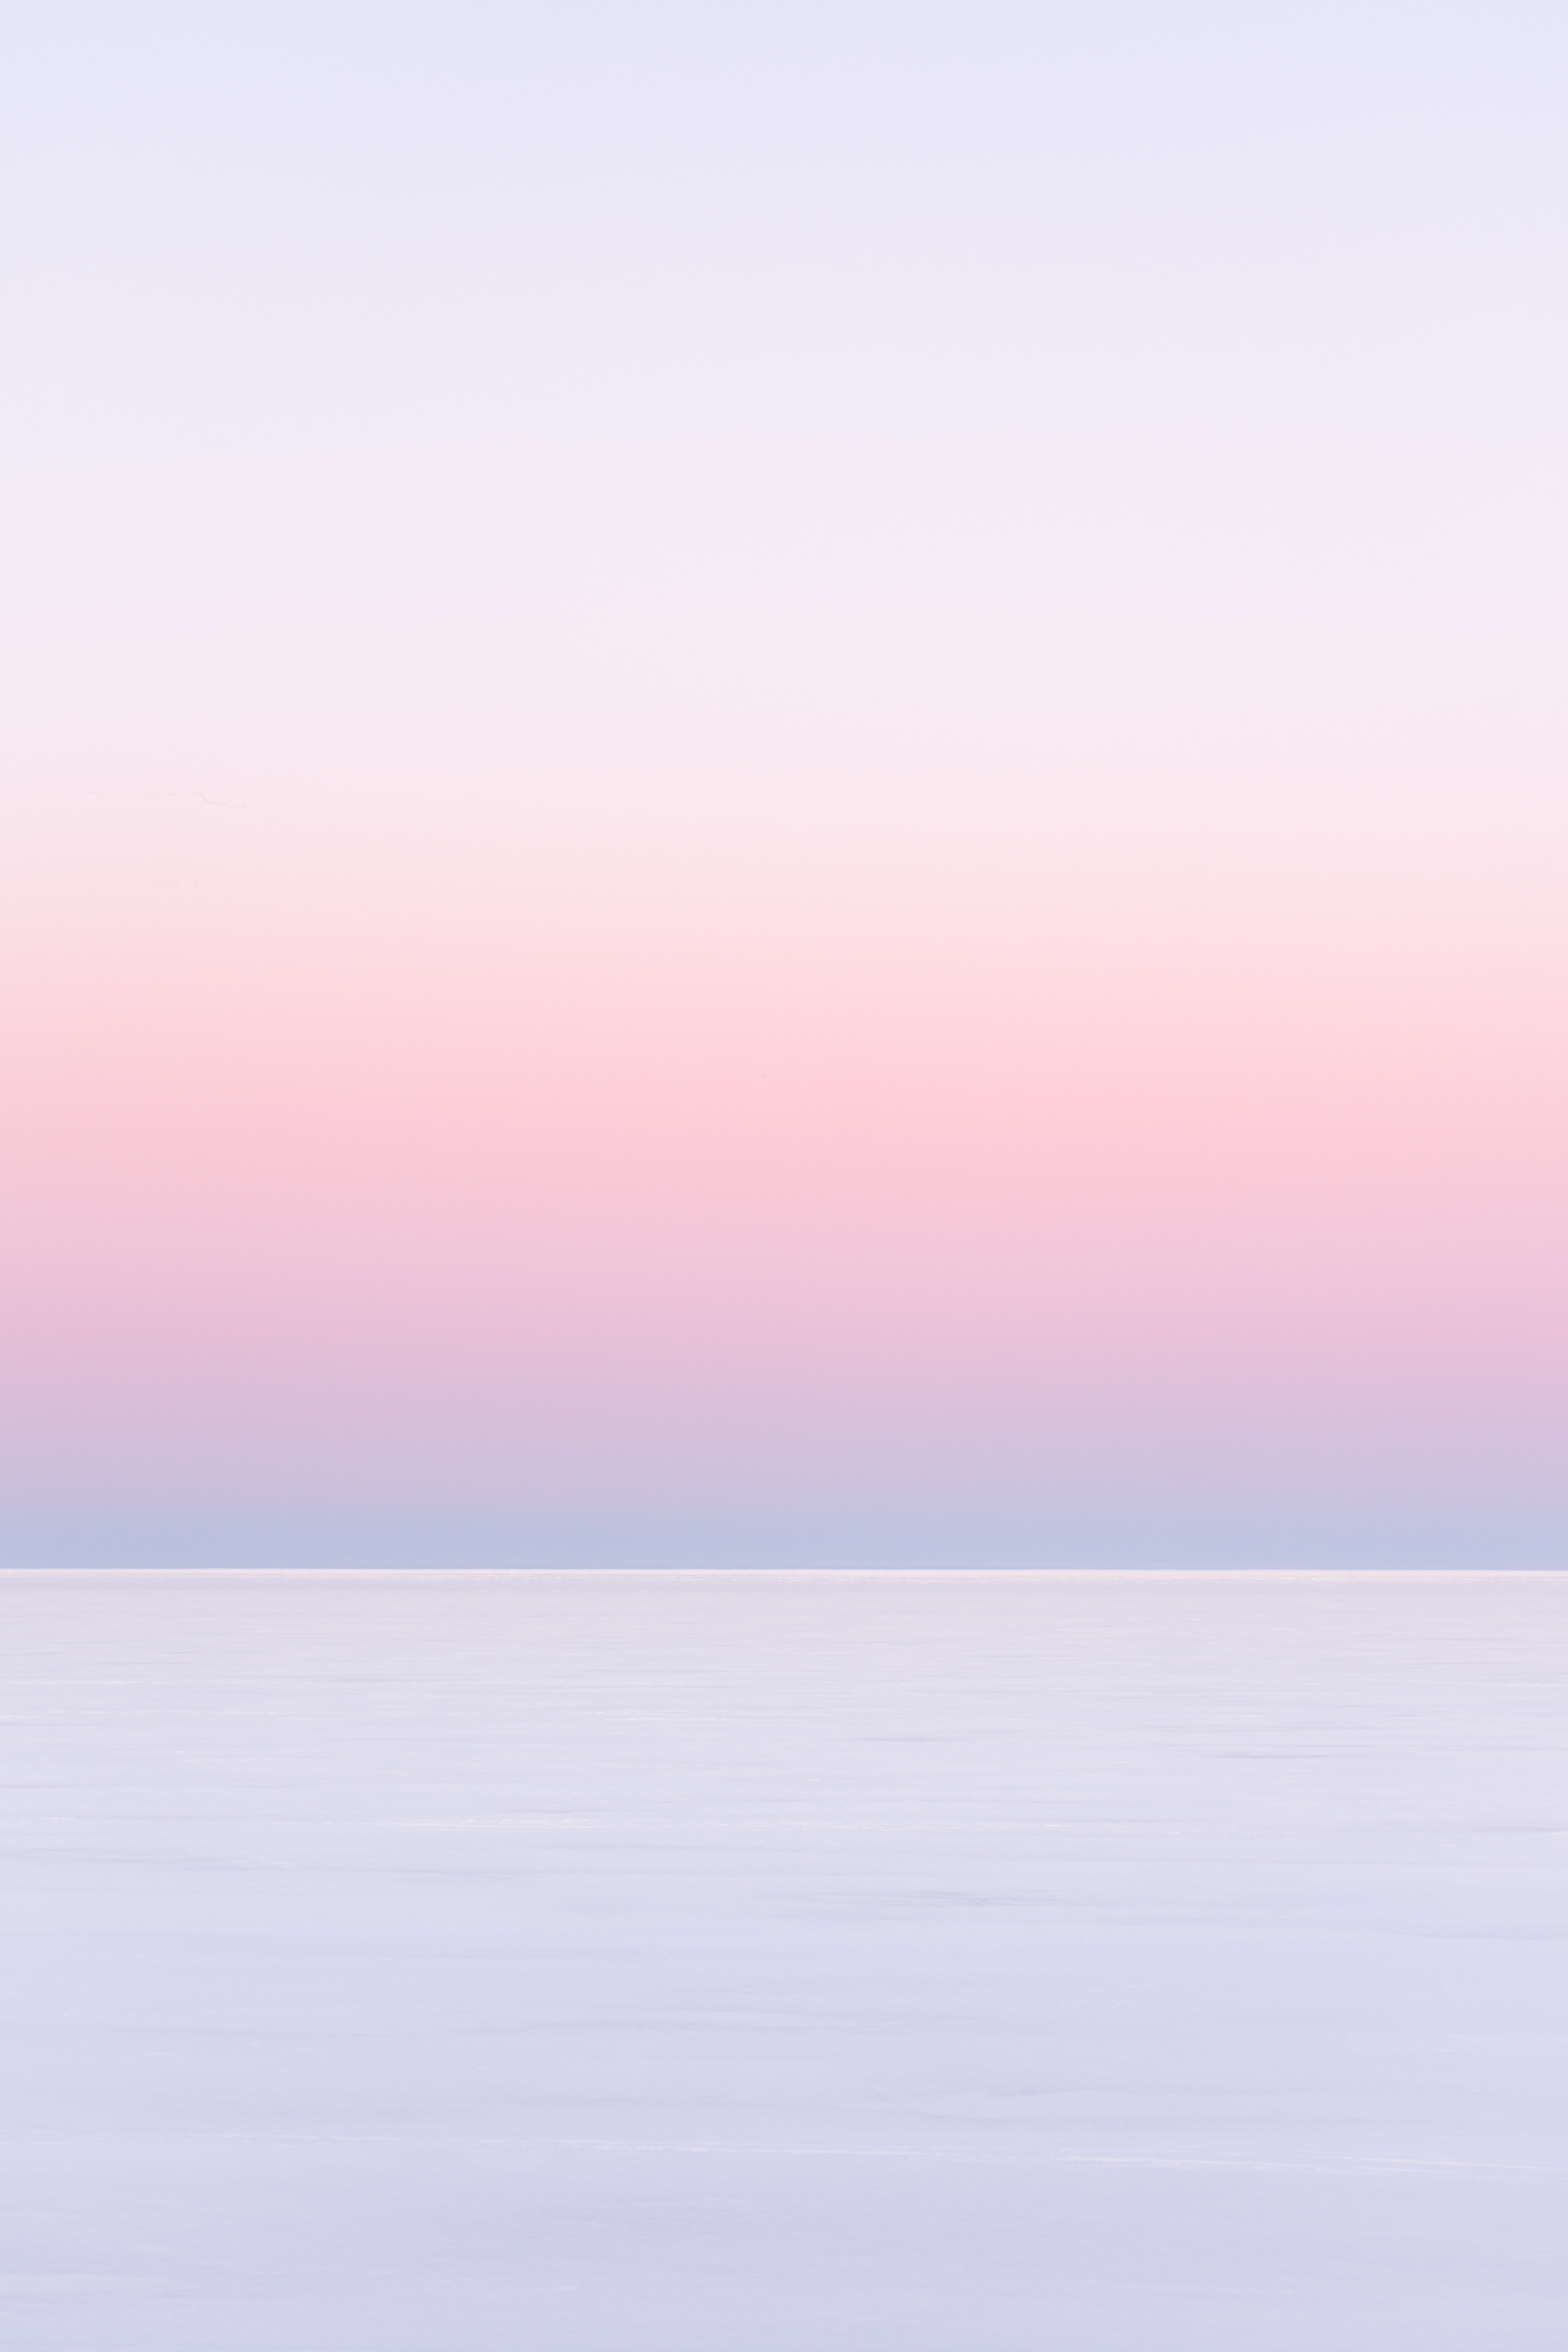 nature, horizon, faded 4K iPhone